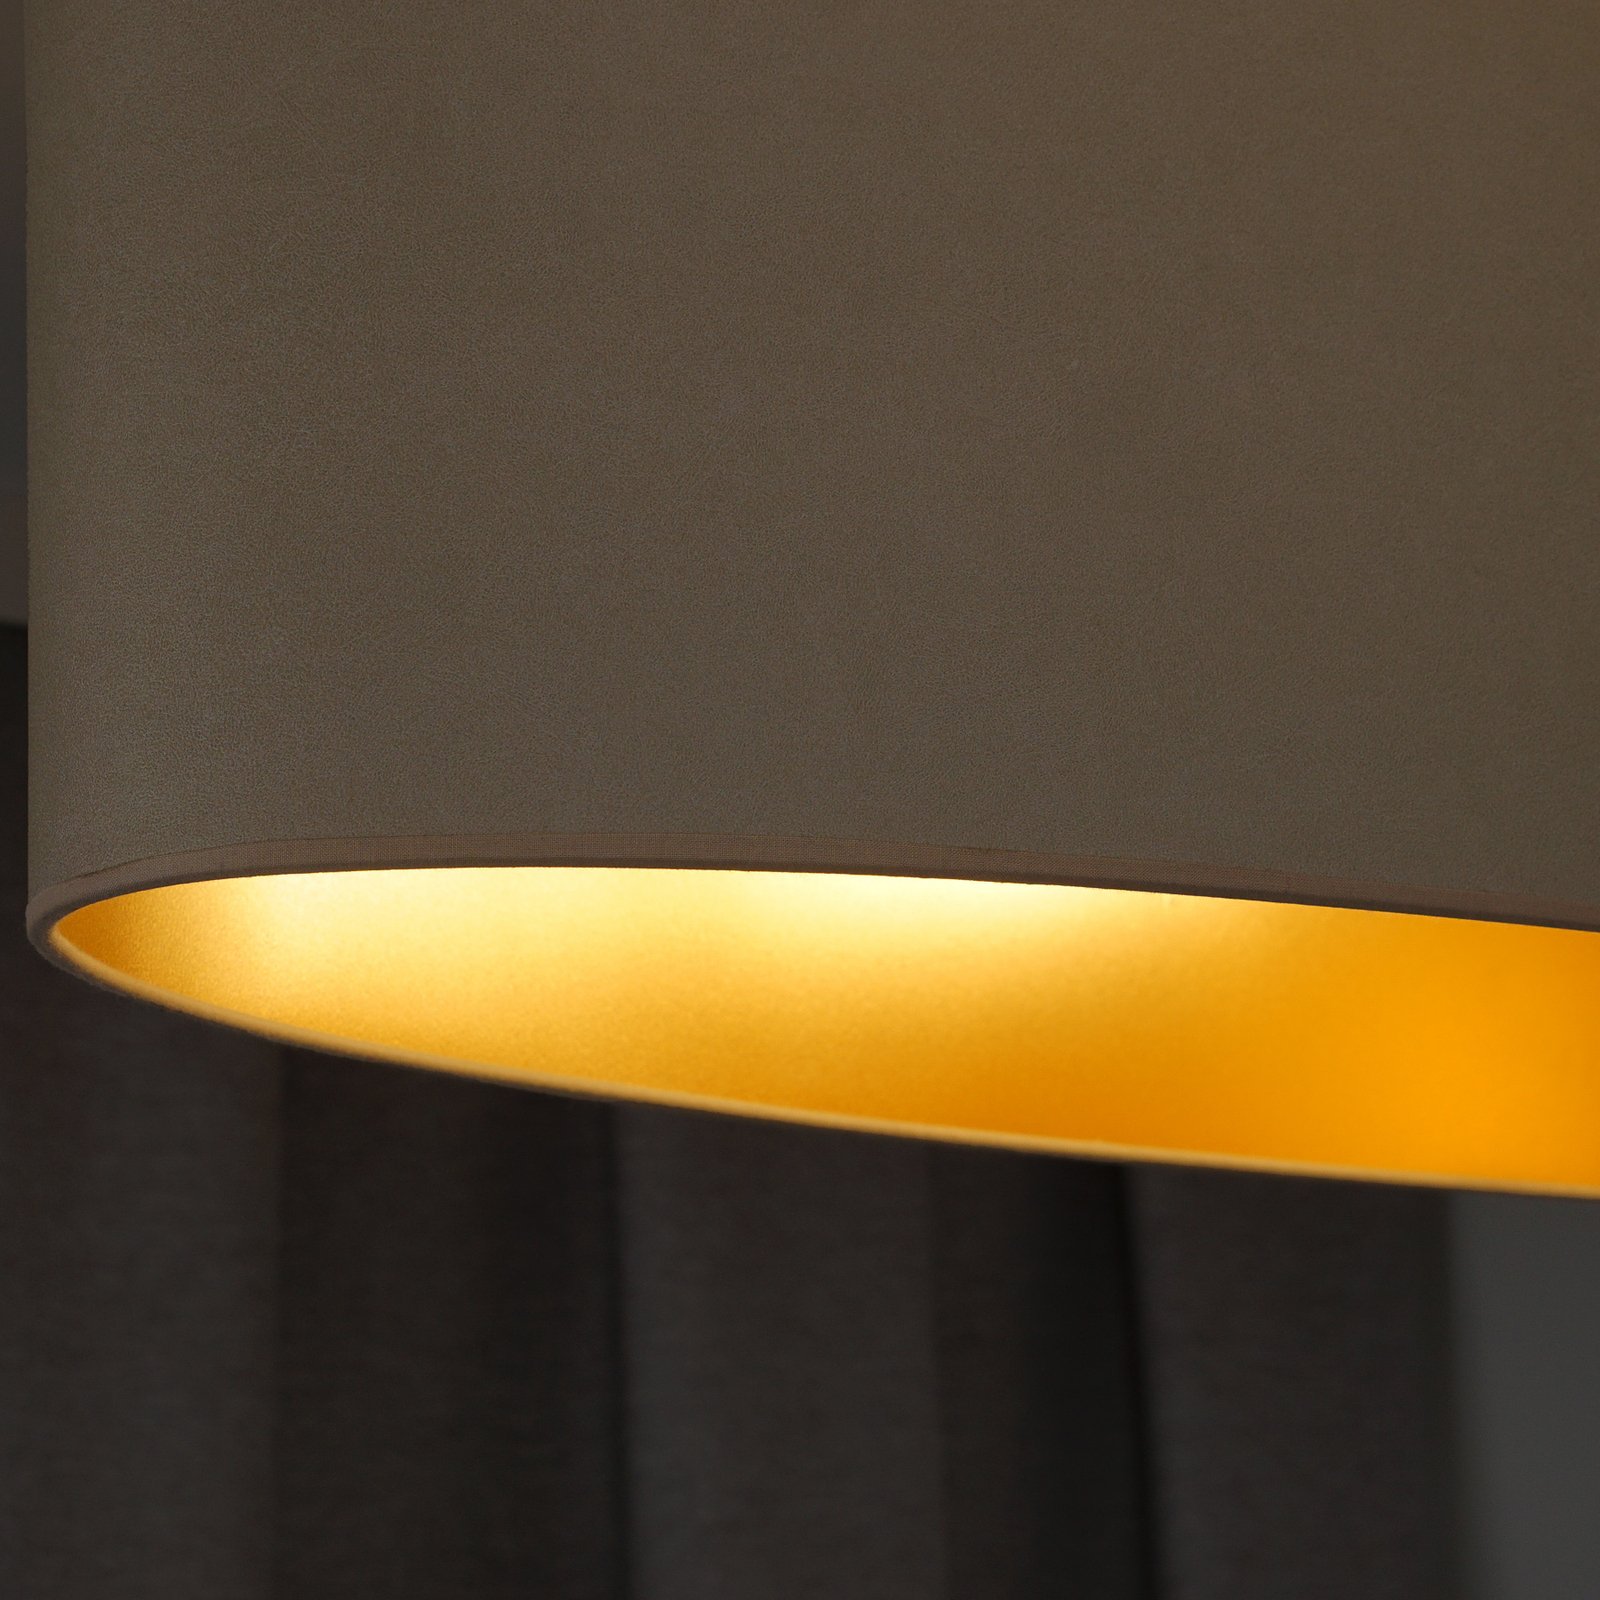 Závesná lampa Envostar Idun light beige, imitácia kože vegan, 80 cm